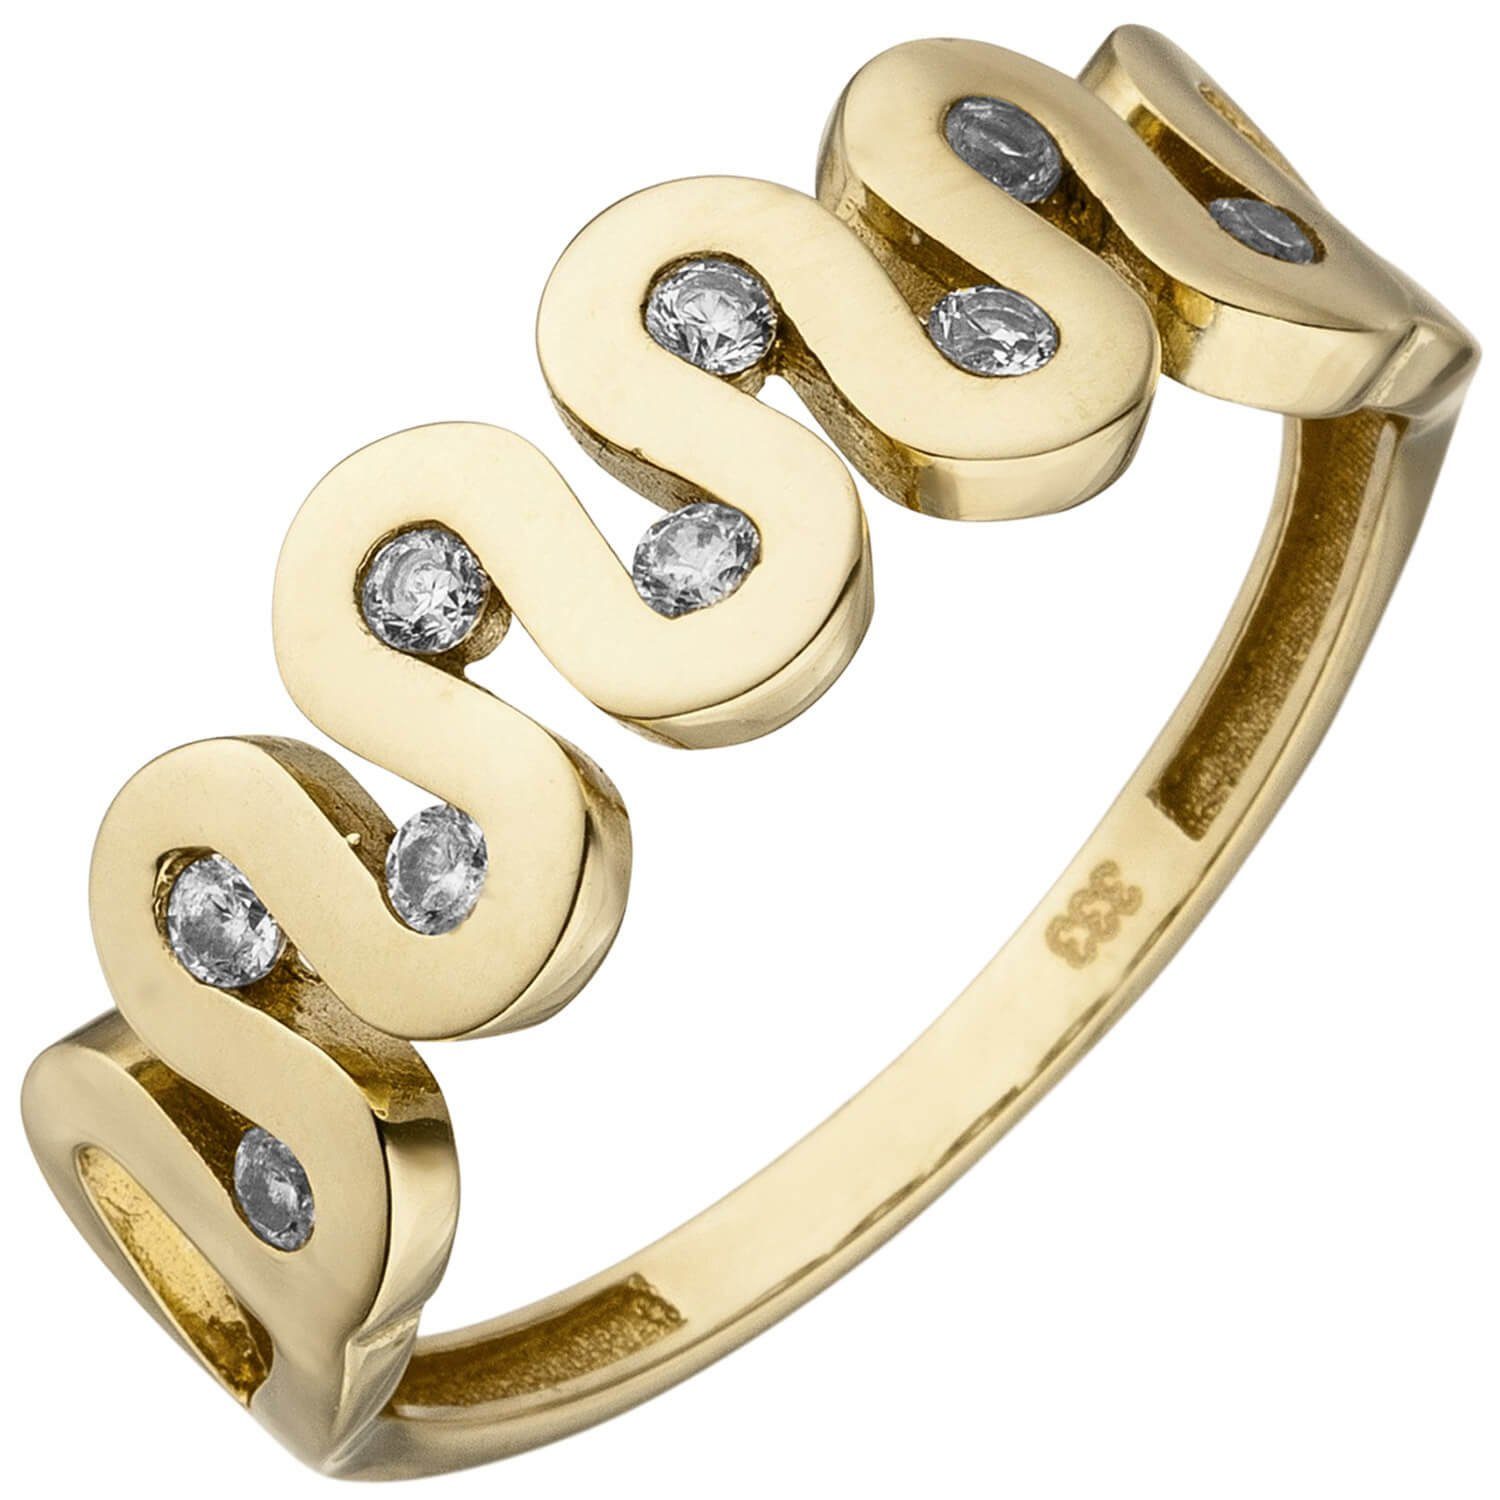 Schmuck Krone Fingerring Ring Damenring mit Wellen 9 Zirkonia 333 Gold Gelbgold Fingerring 7mm breit, Gold 333